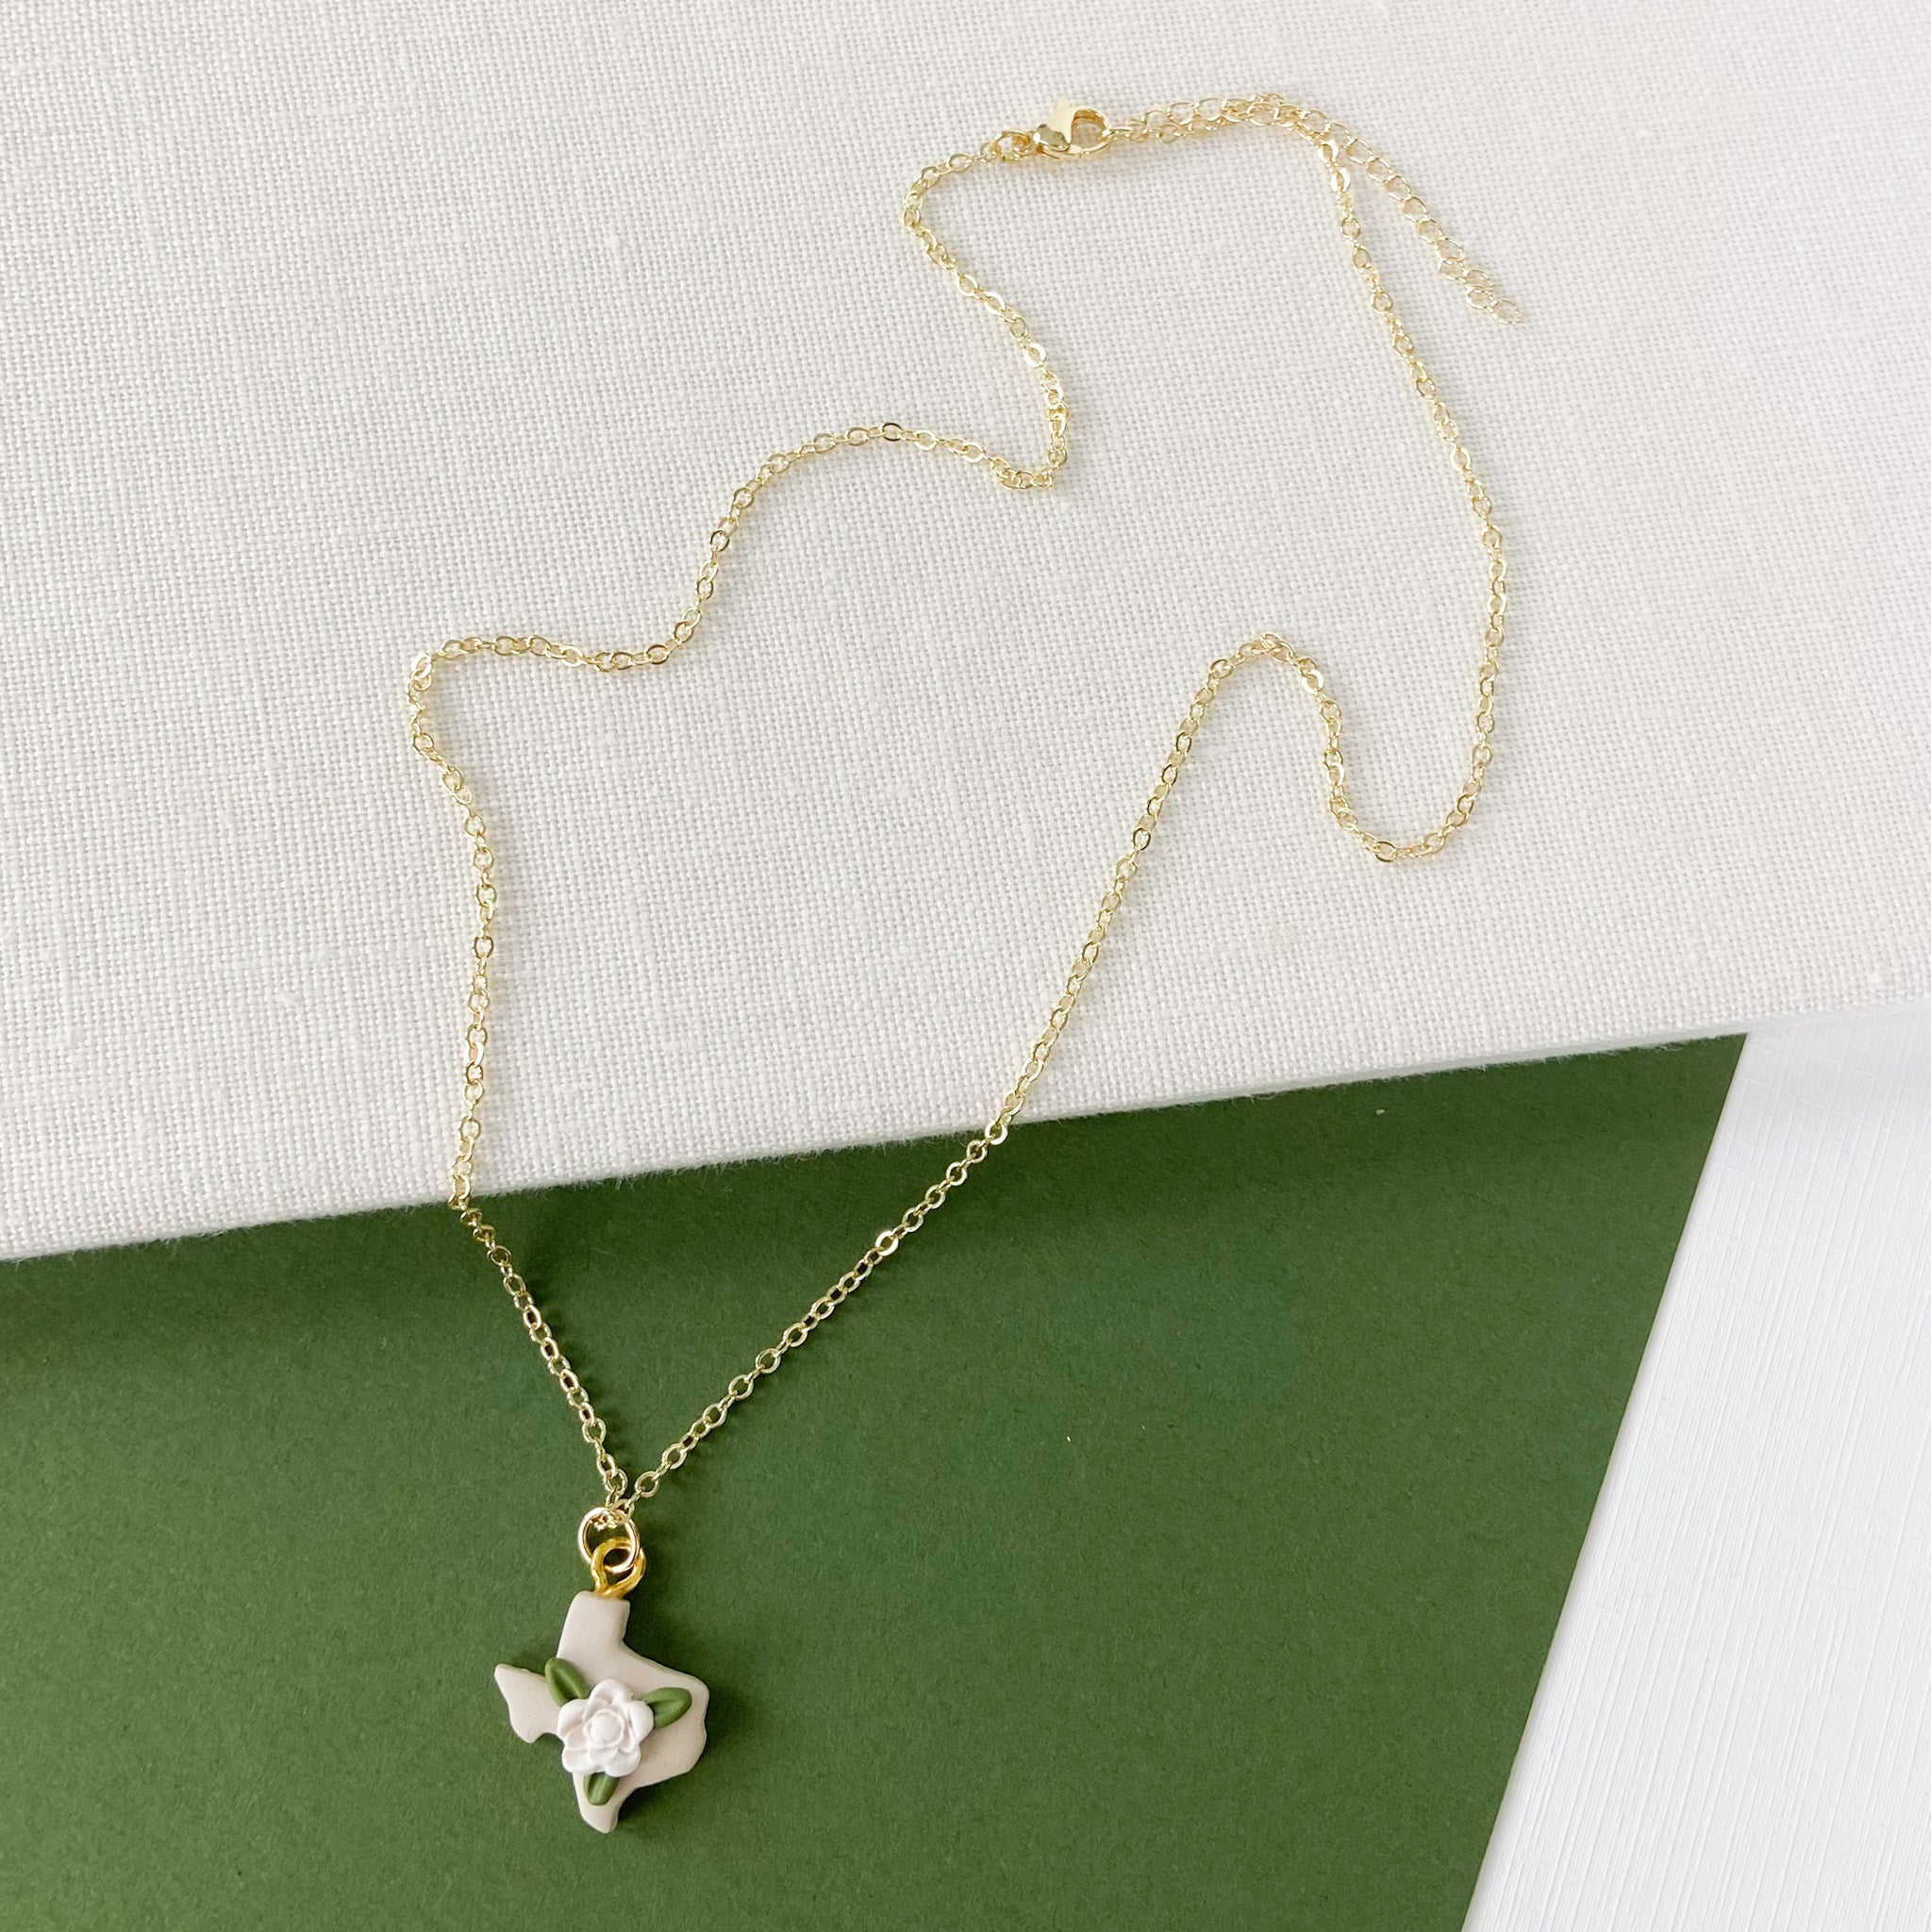 Texas Magnolia Flower Pendant Necklace